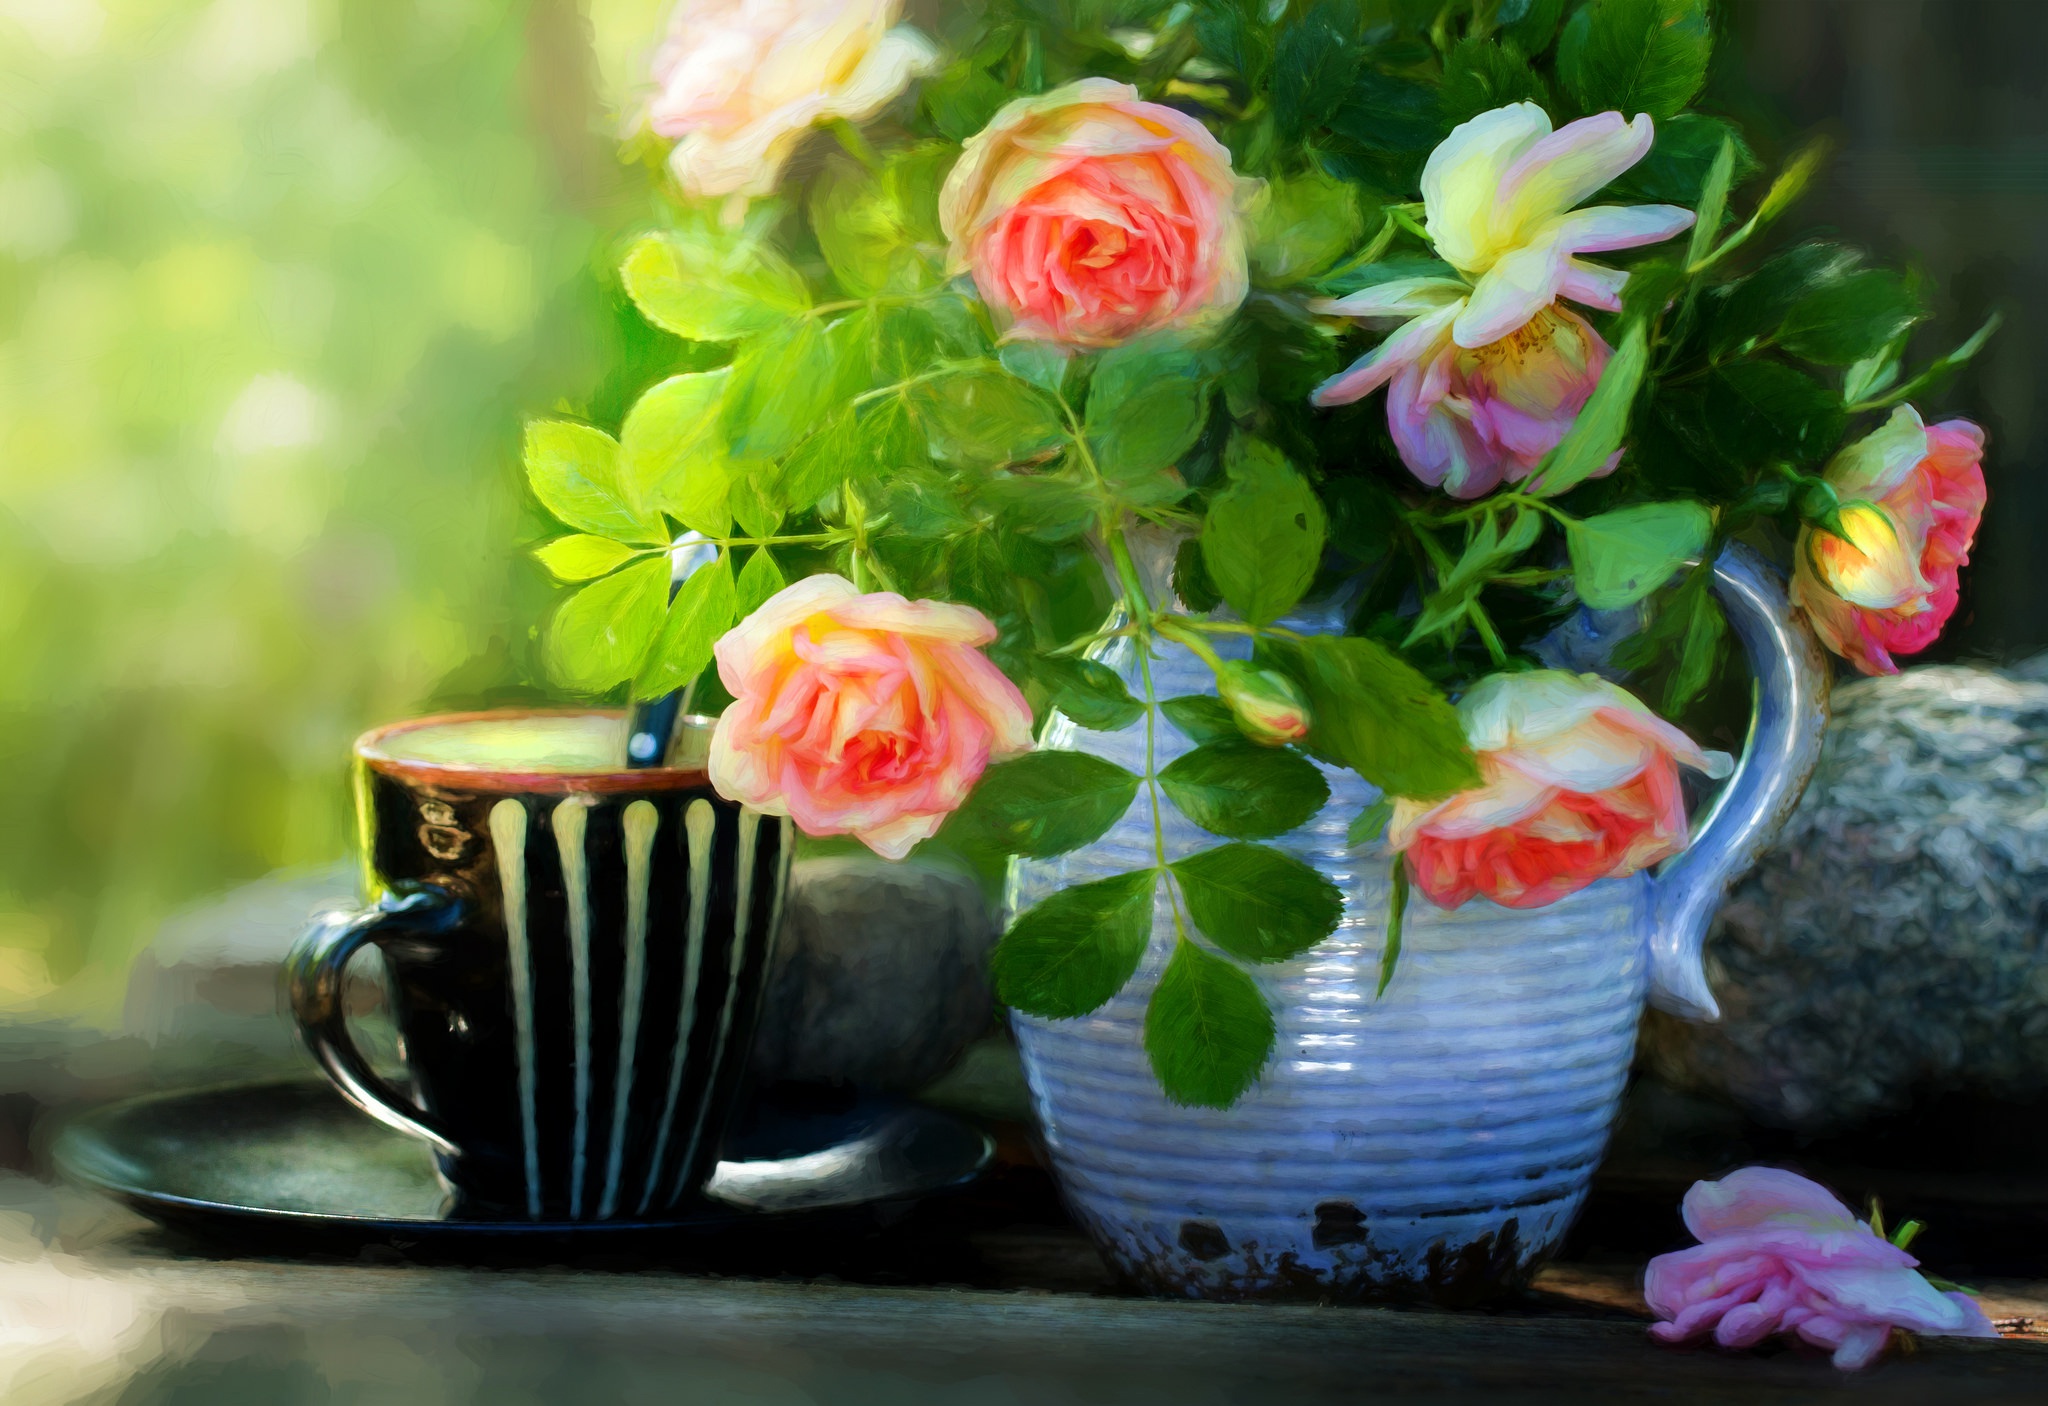 rose, photography, still life, flower, jug, mug lock screen backgrounds